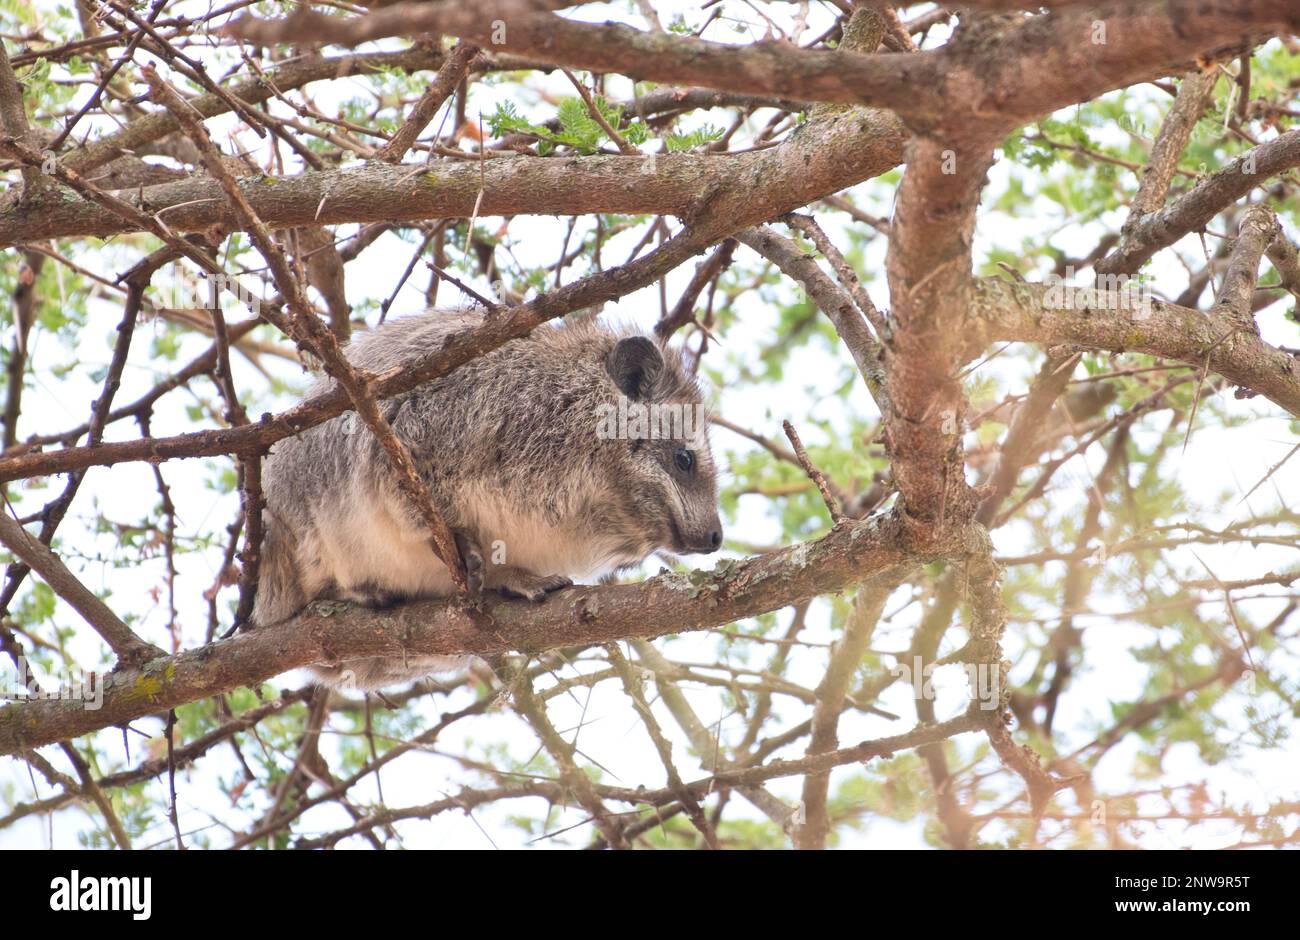 Southern tree hyrax (Dendrohyrax arboreus) Stock Photo